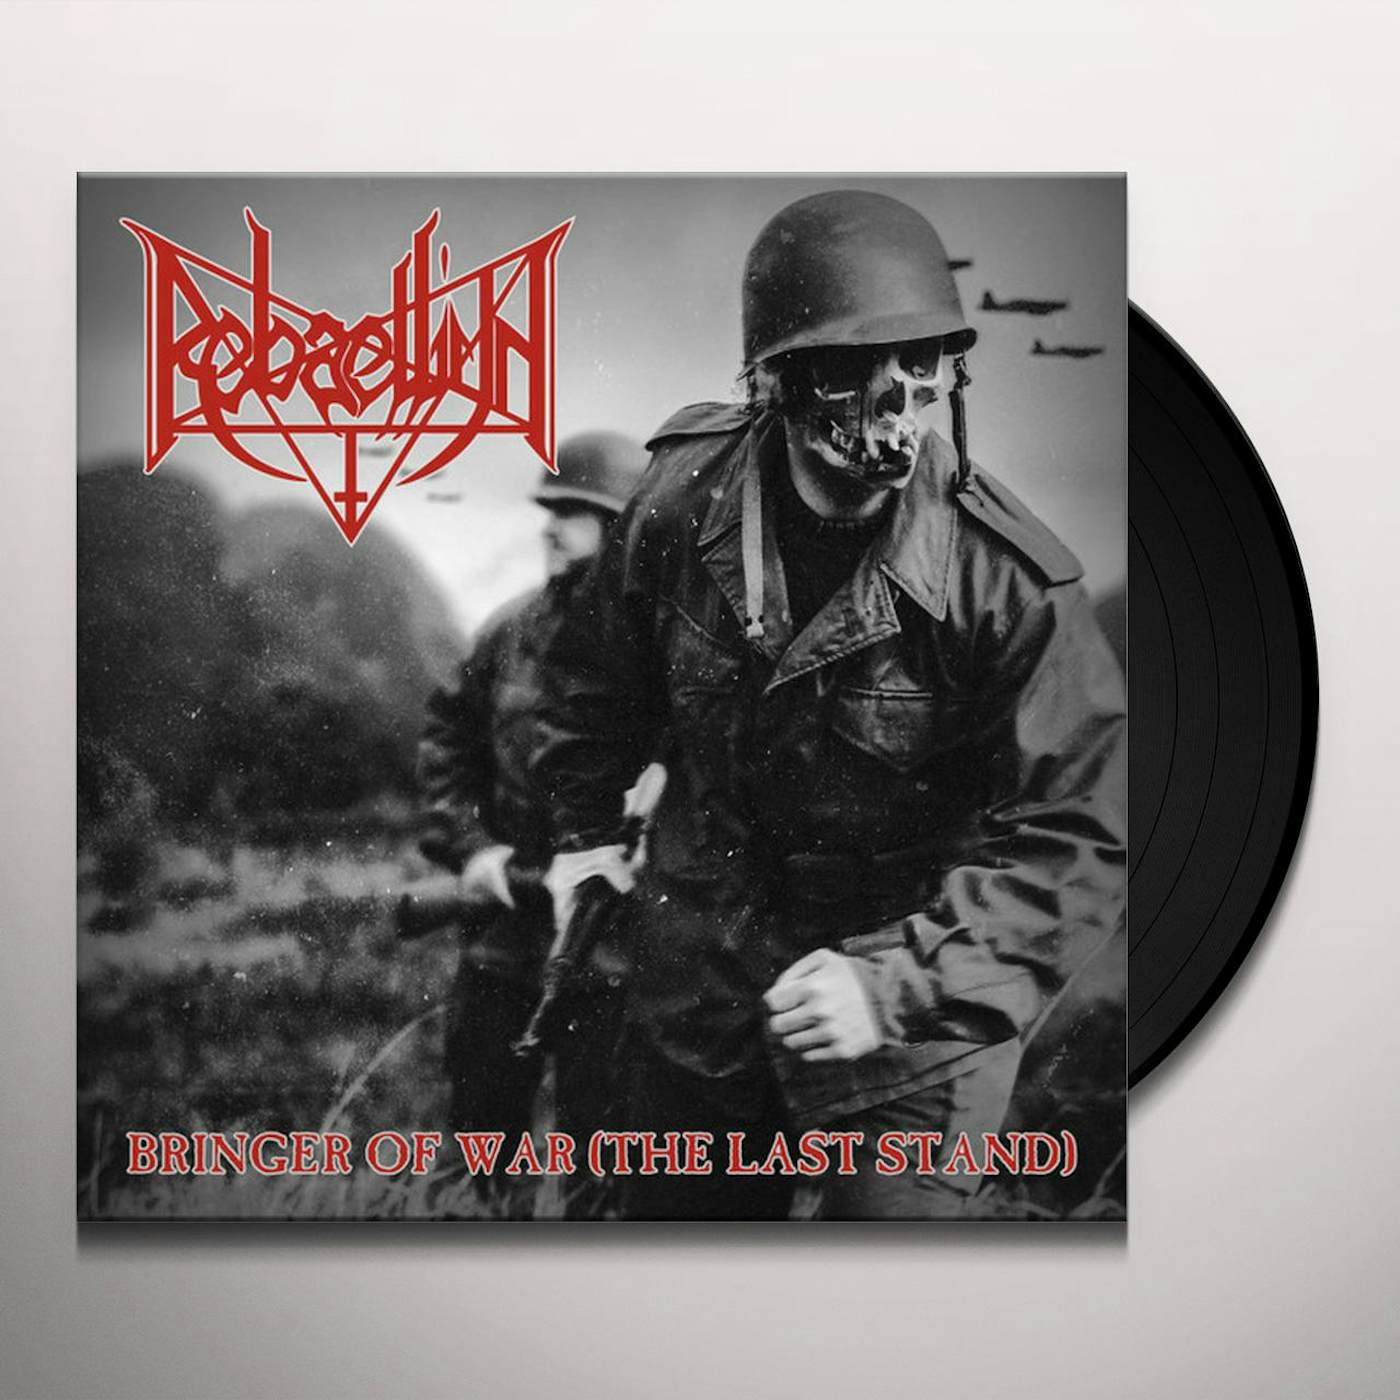 Rebaelliun BRINGER OF WAR (THE LAST STAND) Vinyl Record